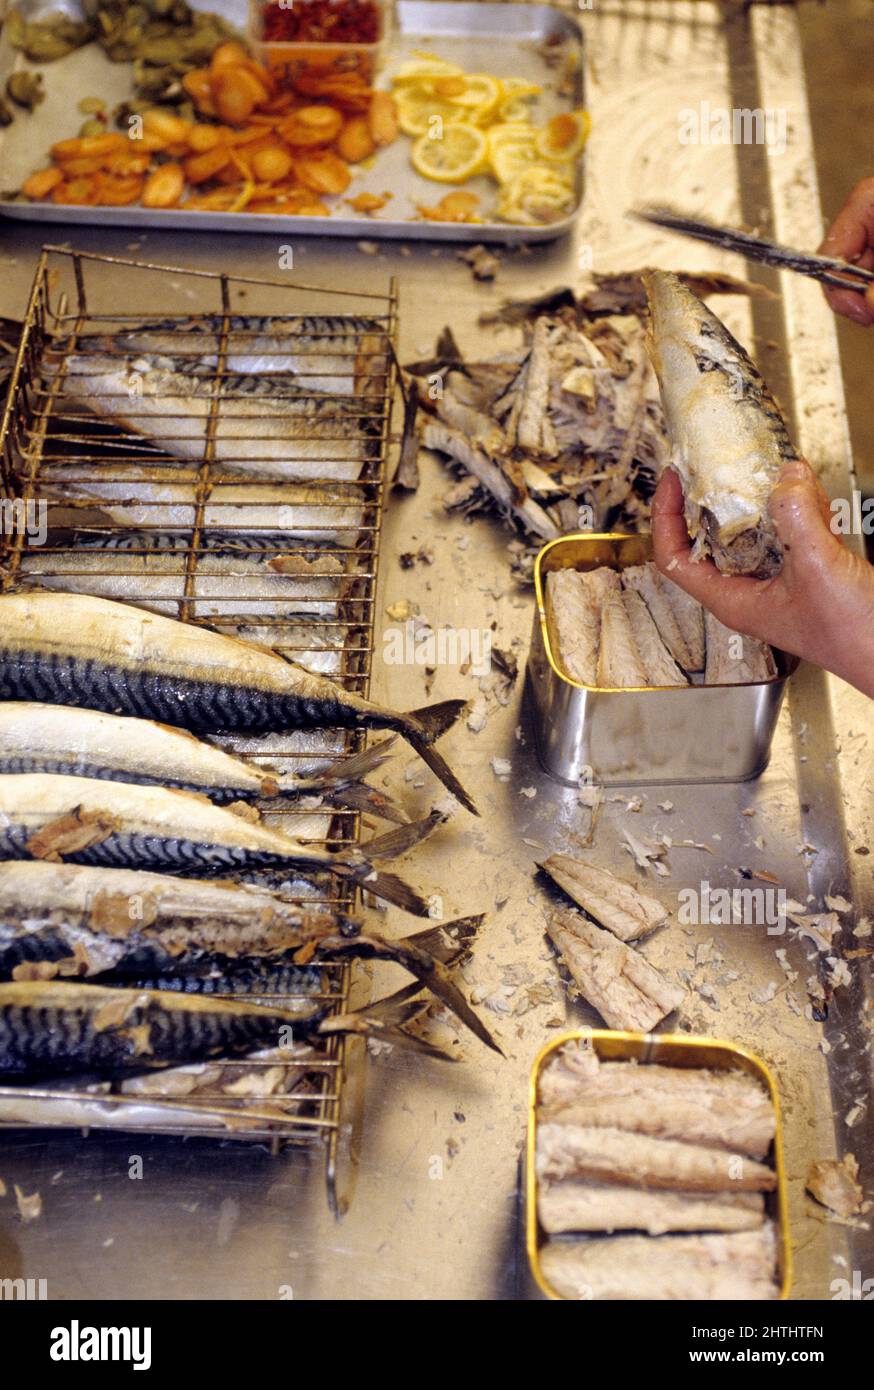 Makrele kann die Produktion erhalten Stockfoto